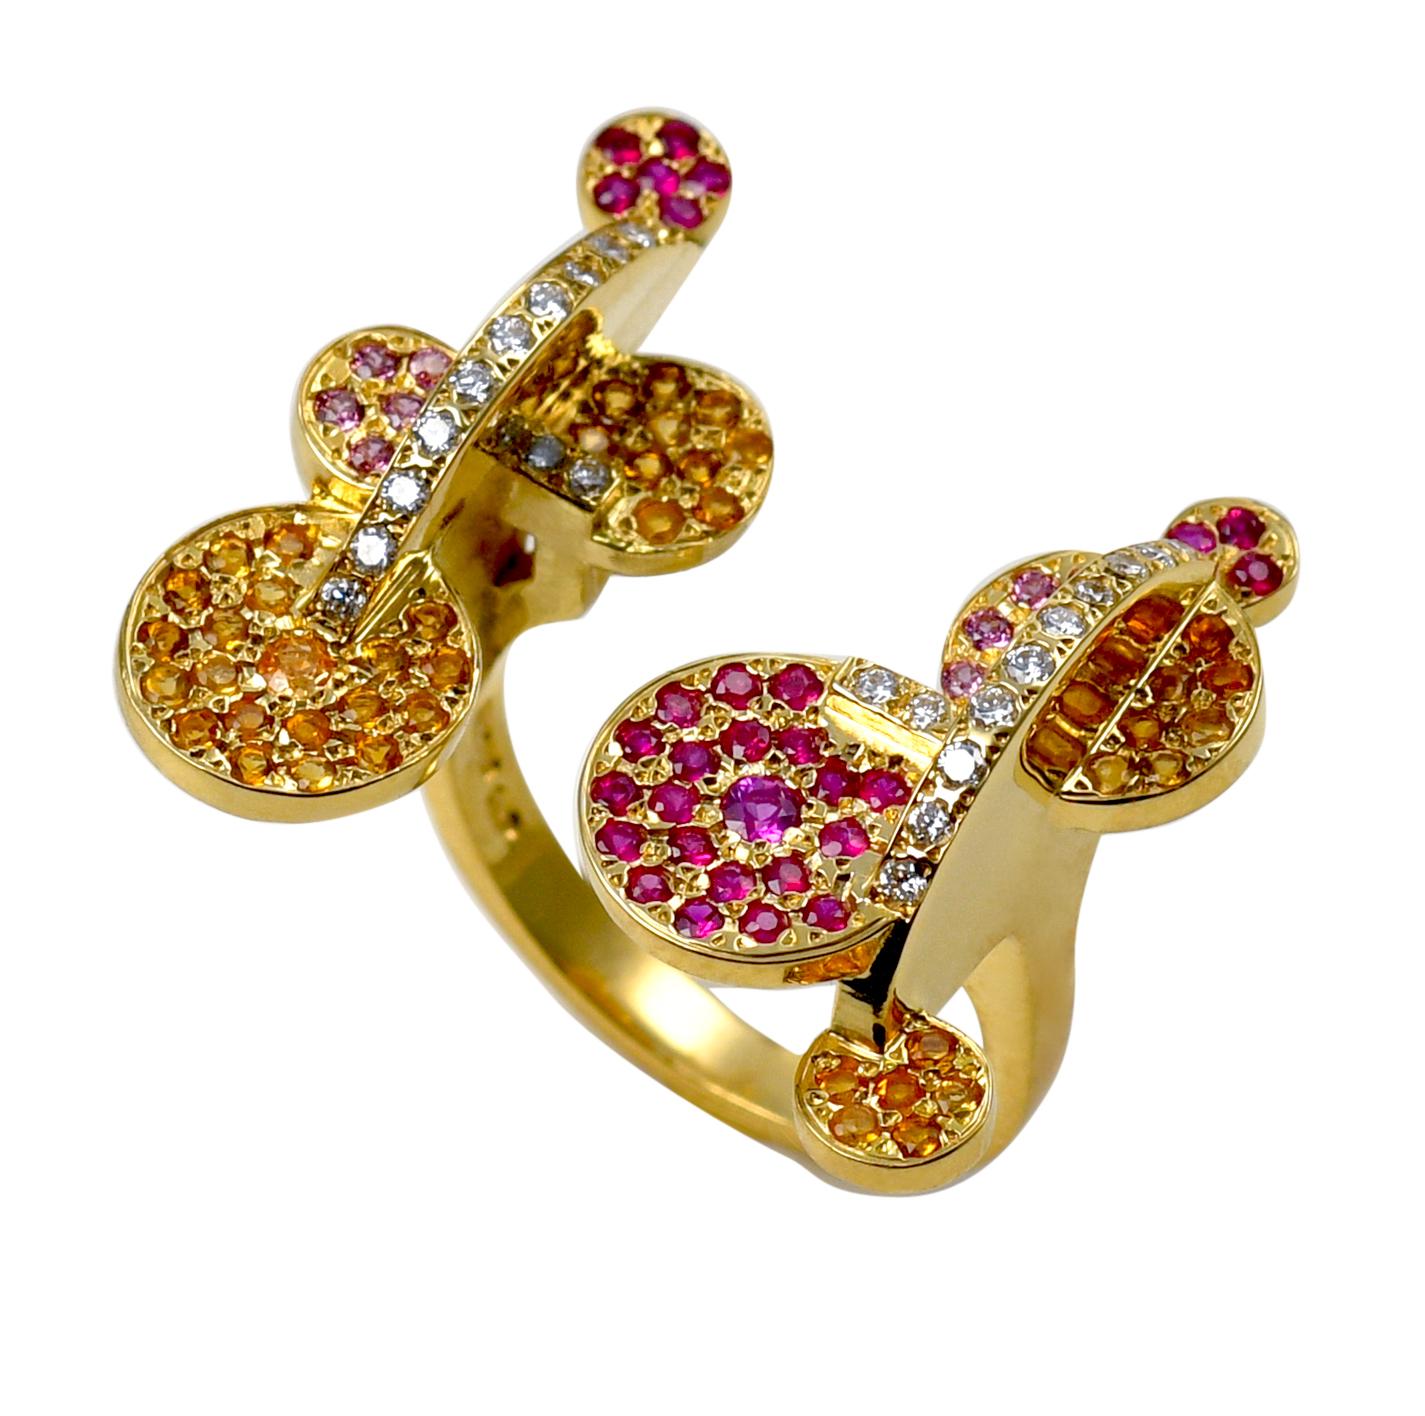 Maria Kotsoni, Contemporary 18k Gold Coloured Gemstone & Diamond Sculptural Ring